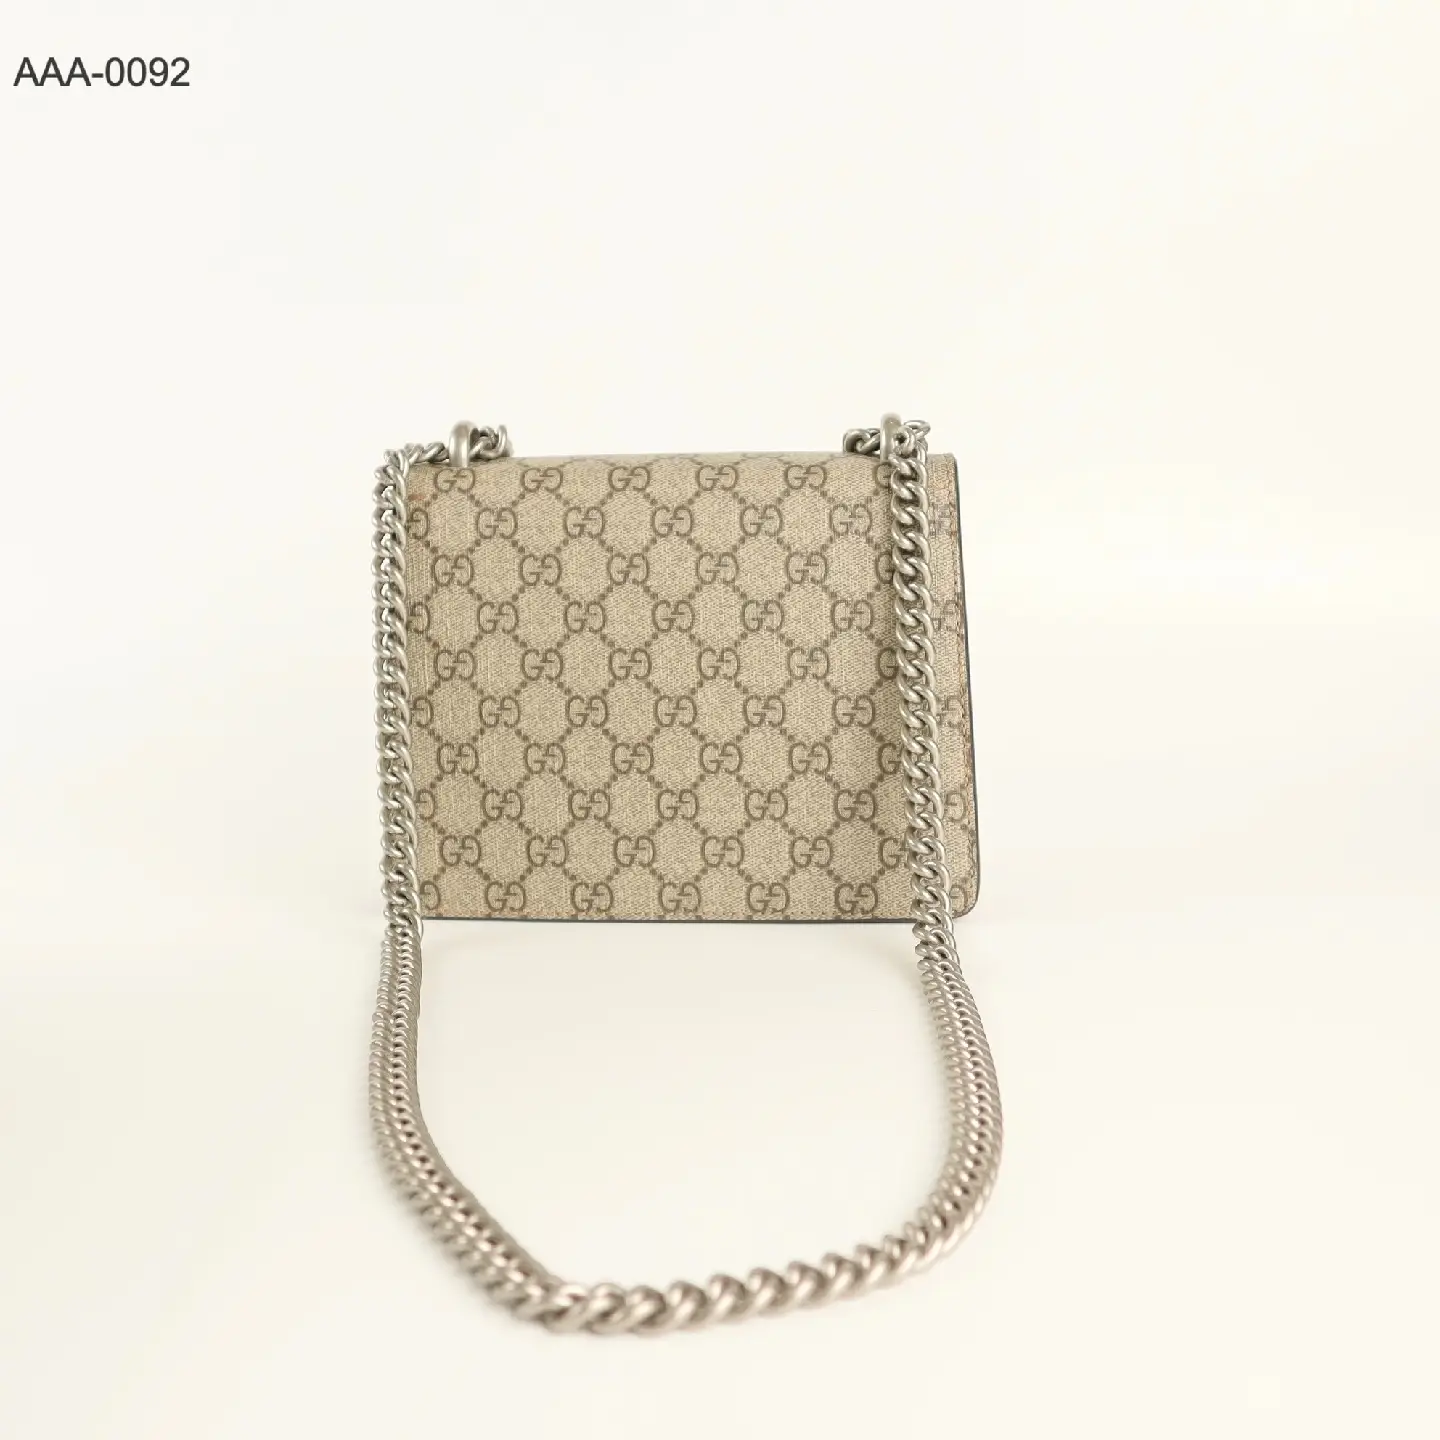 Gucci -Ophidia GG small shoulder bag 25×17cm #gucci #guccibags